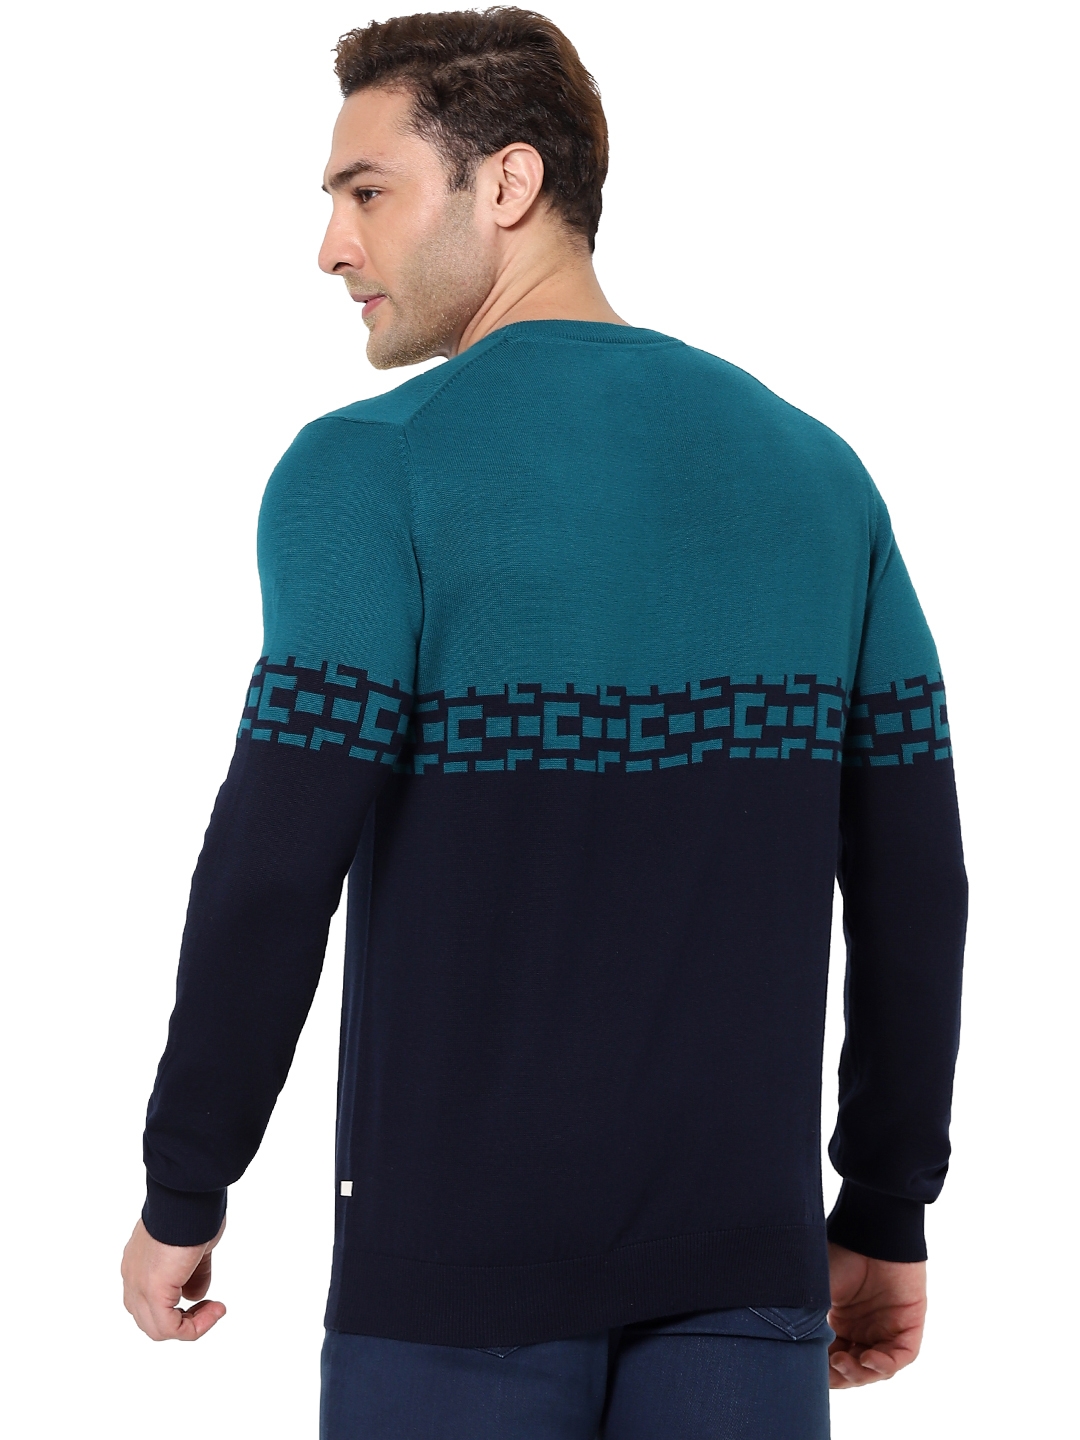 celio | Men's Green Colourblock Sweaters 3